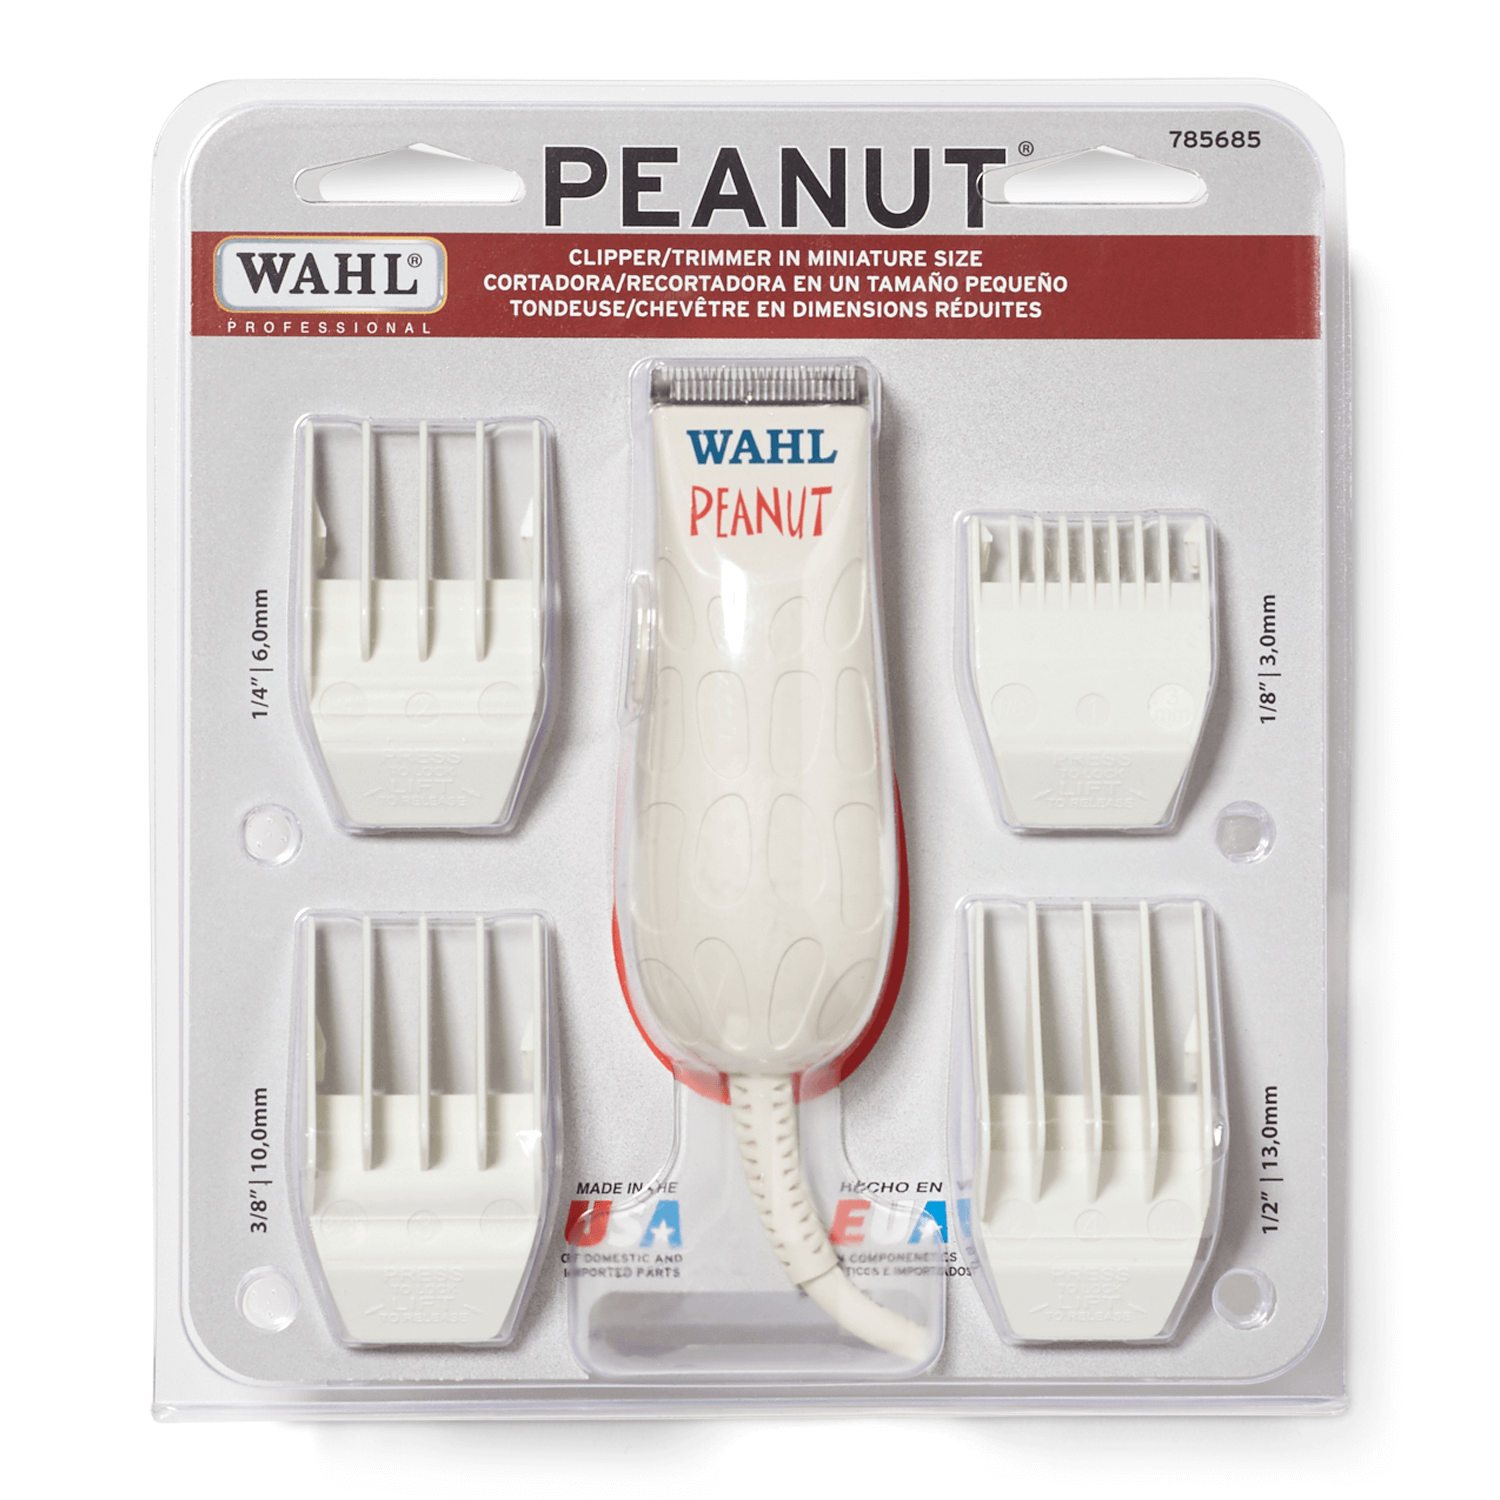 peanut electric razor